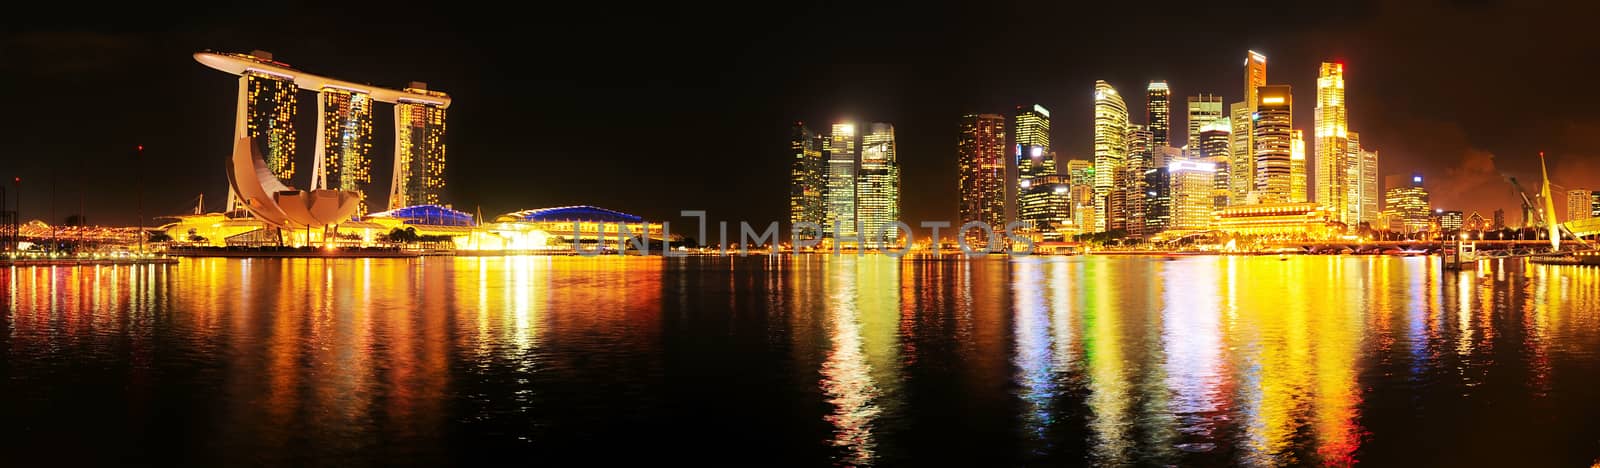 Panoramic view of Singapore at night